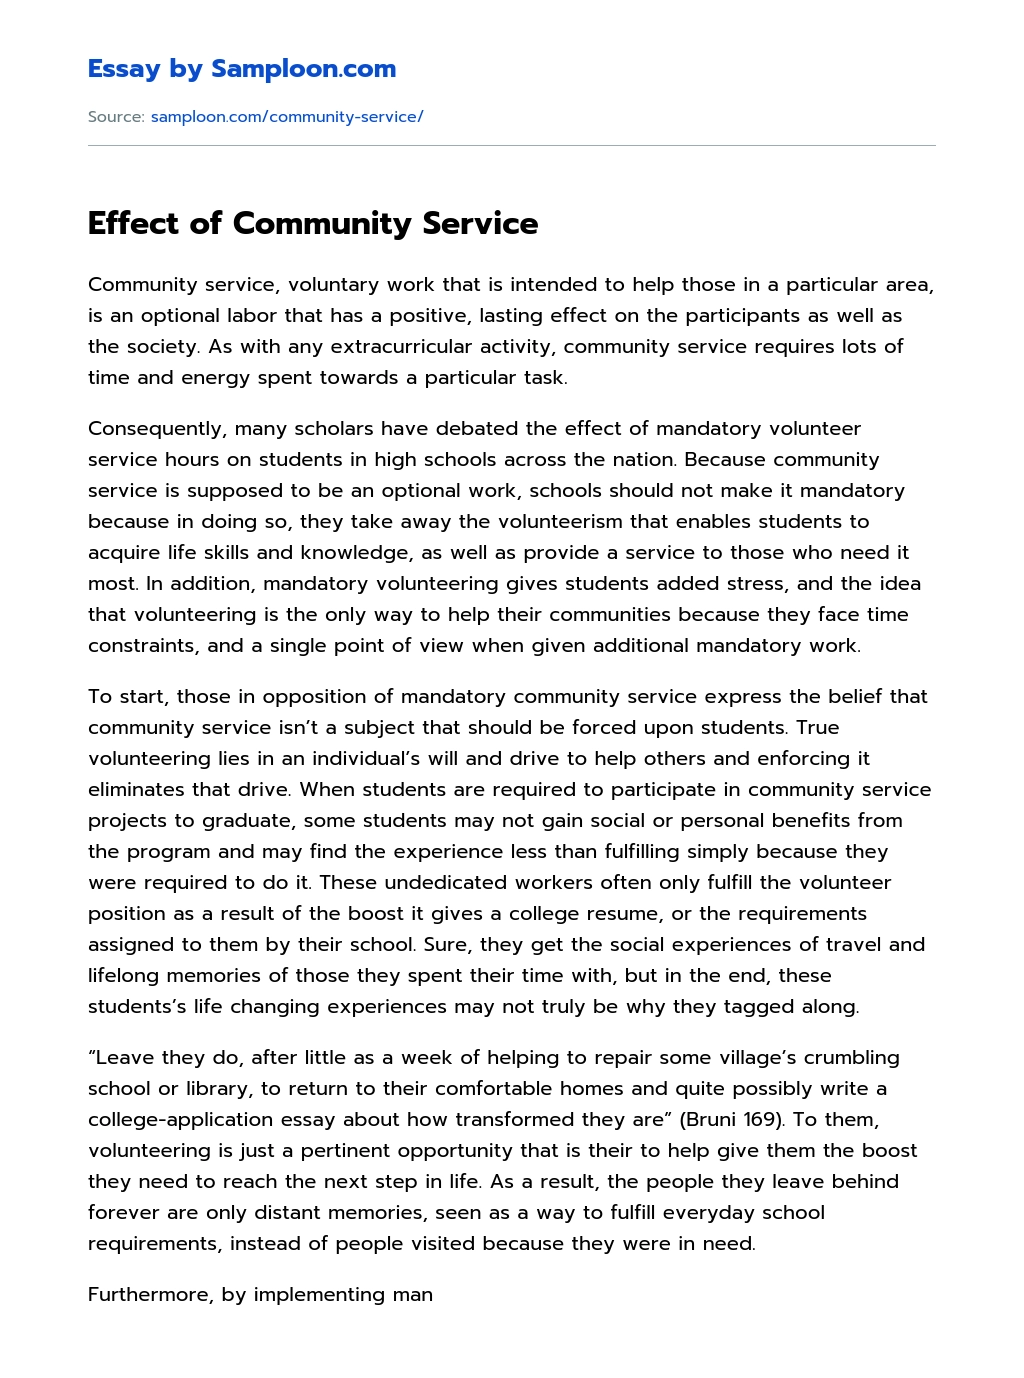 benefits of community service essay